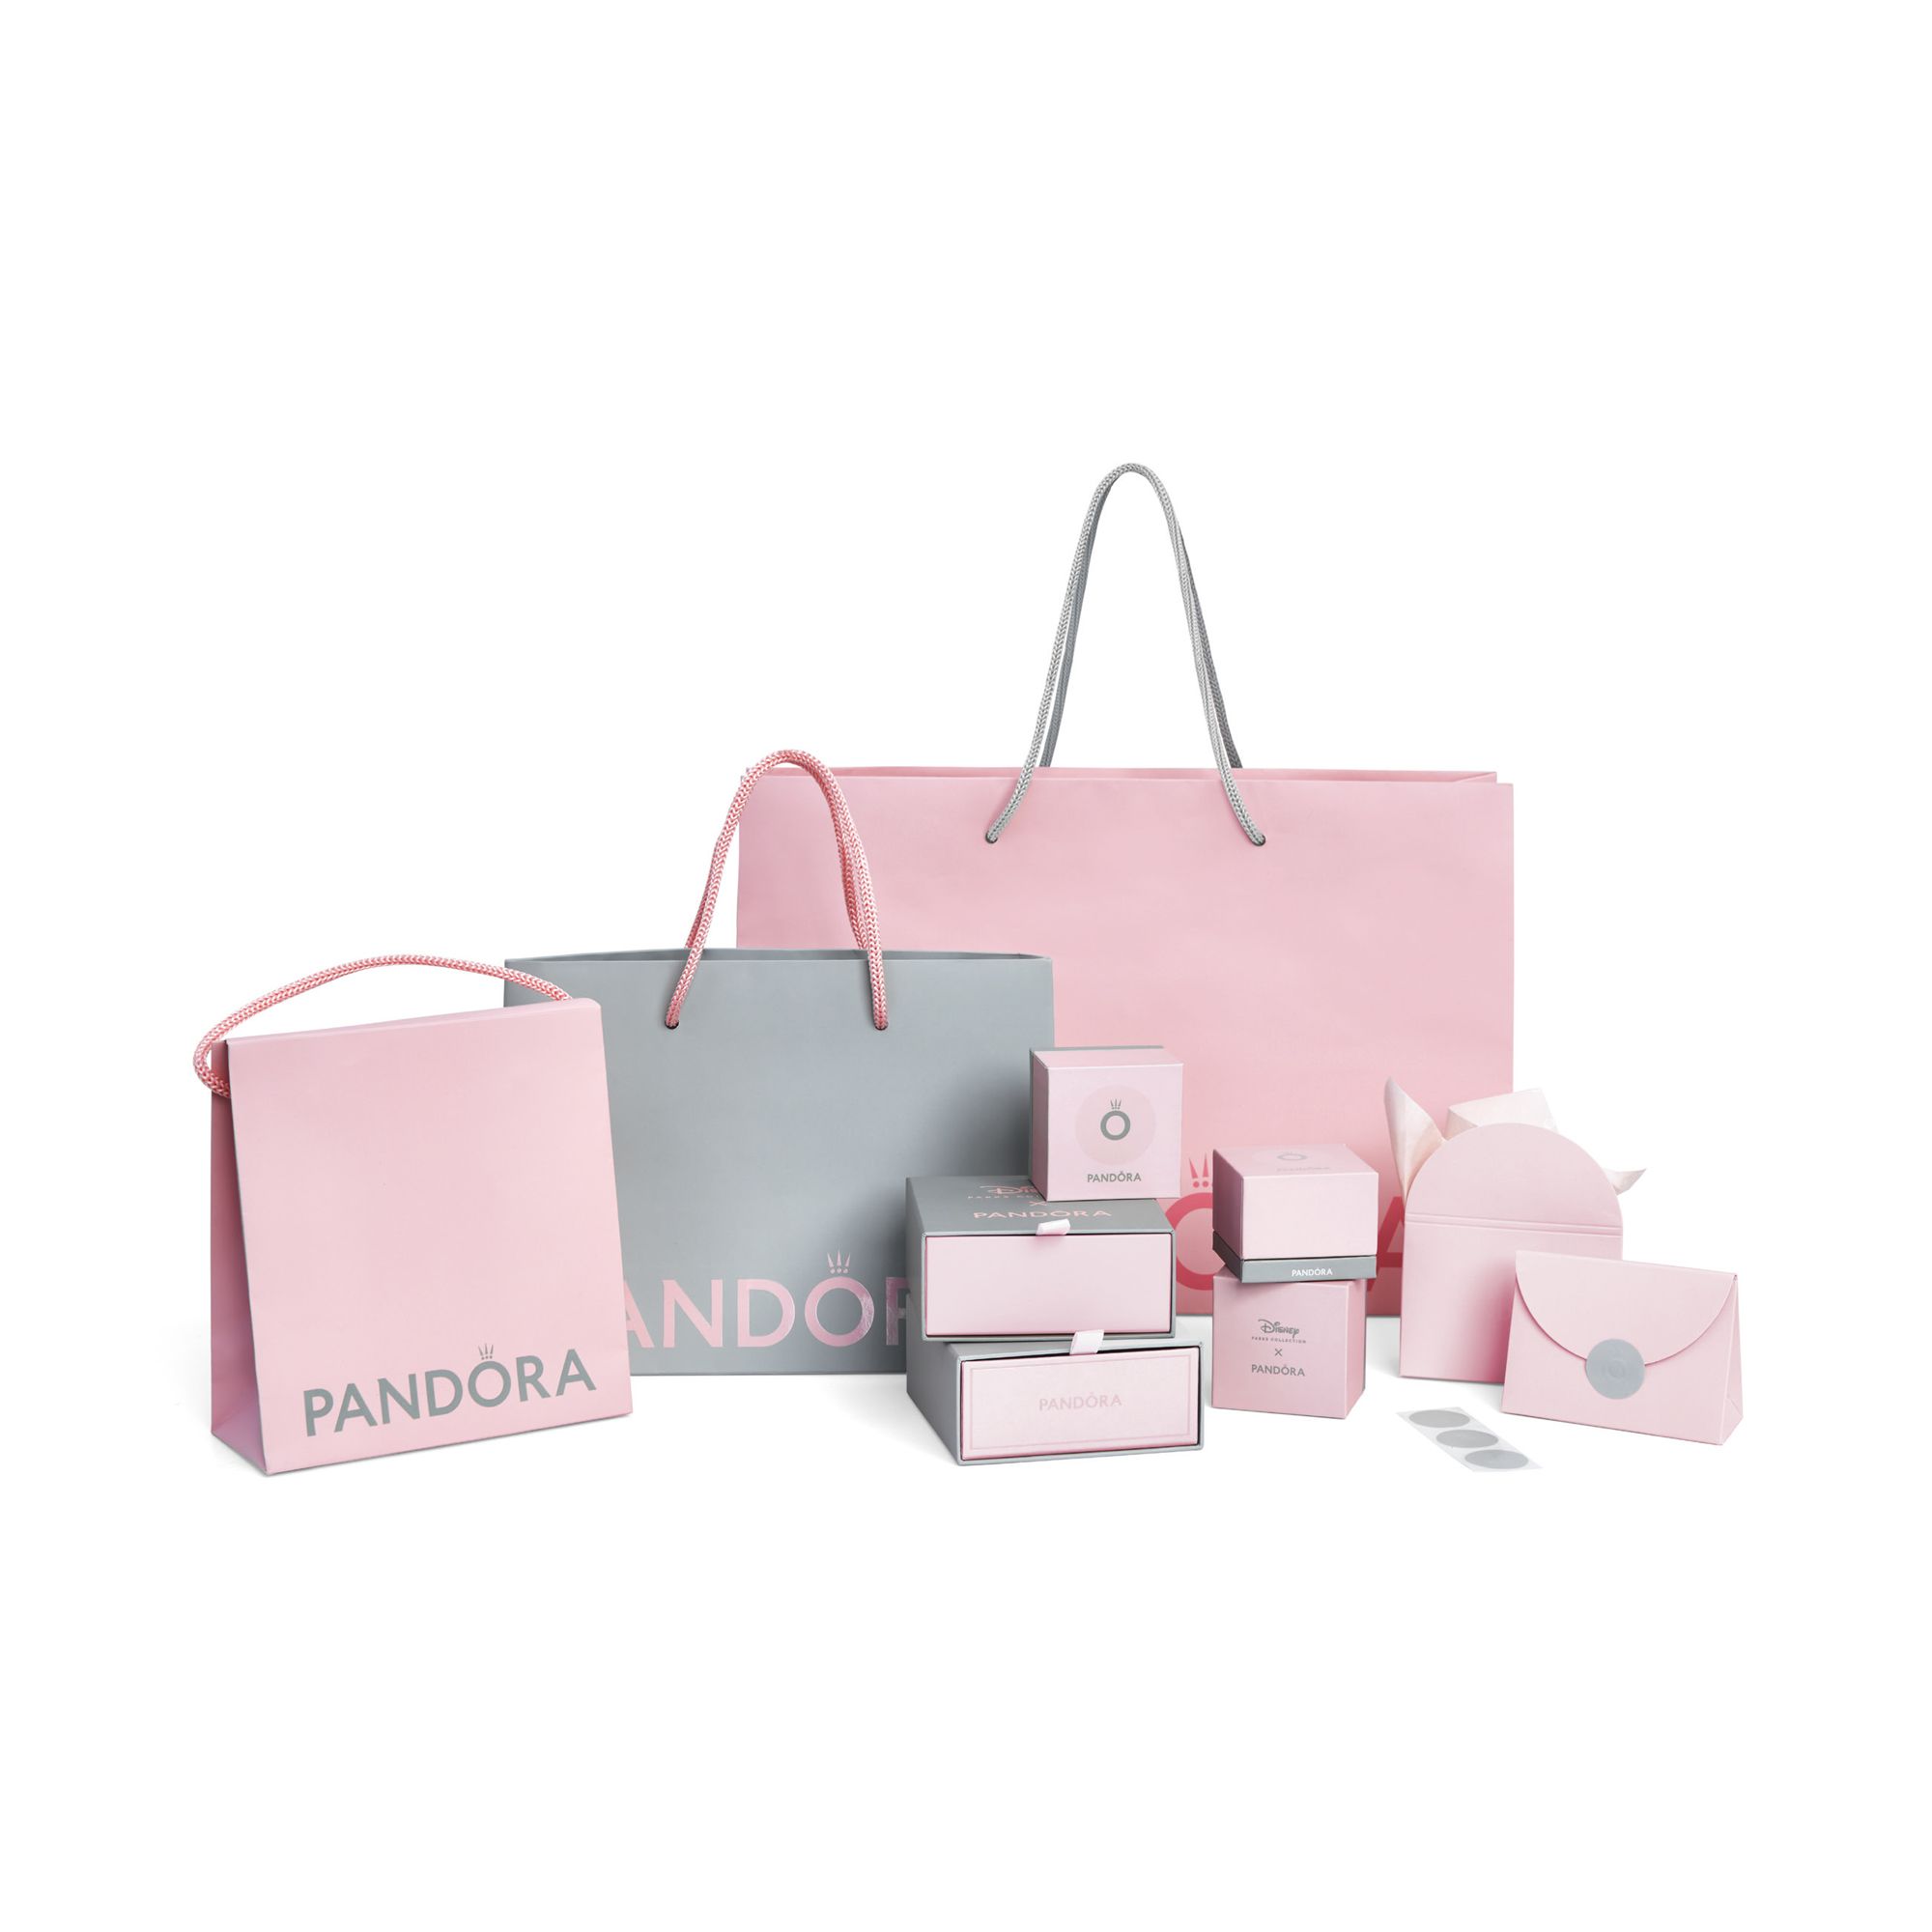 Pandora Pancer láncos rozé nyaklánc